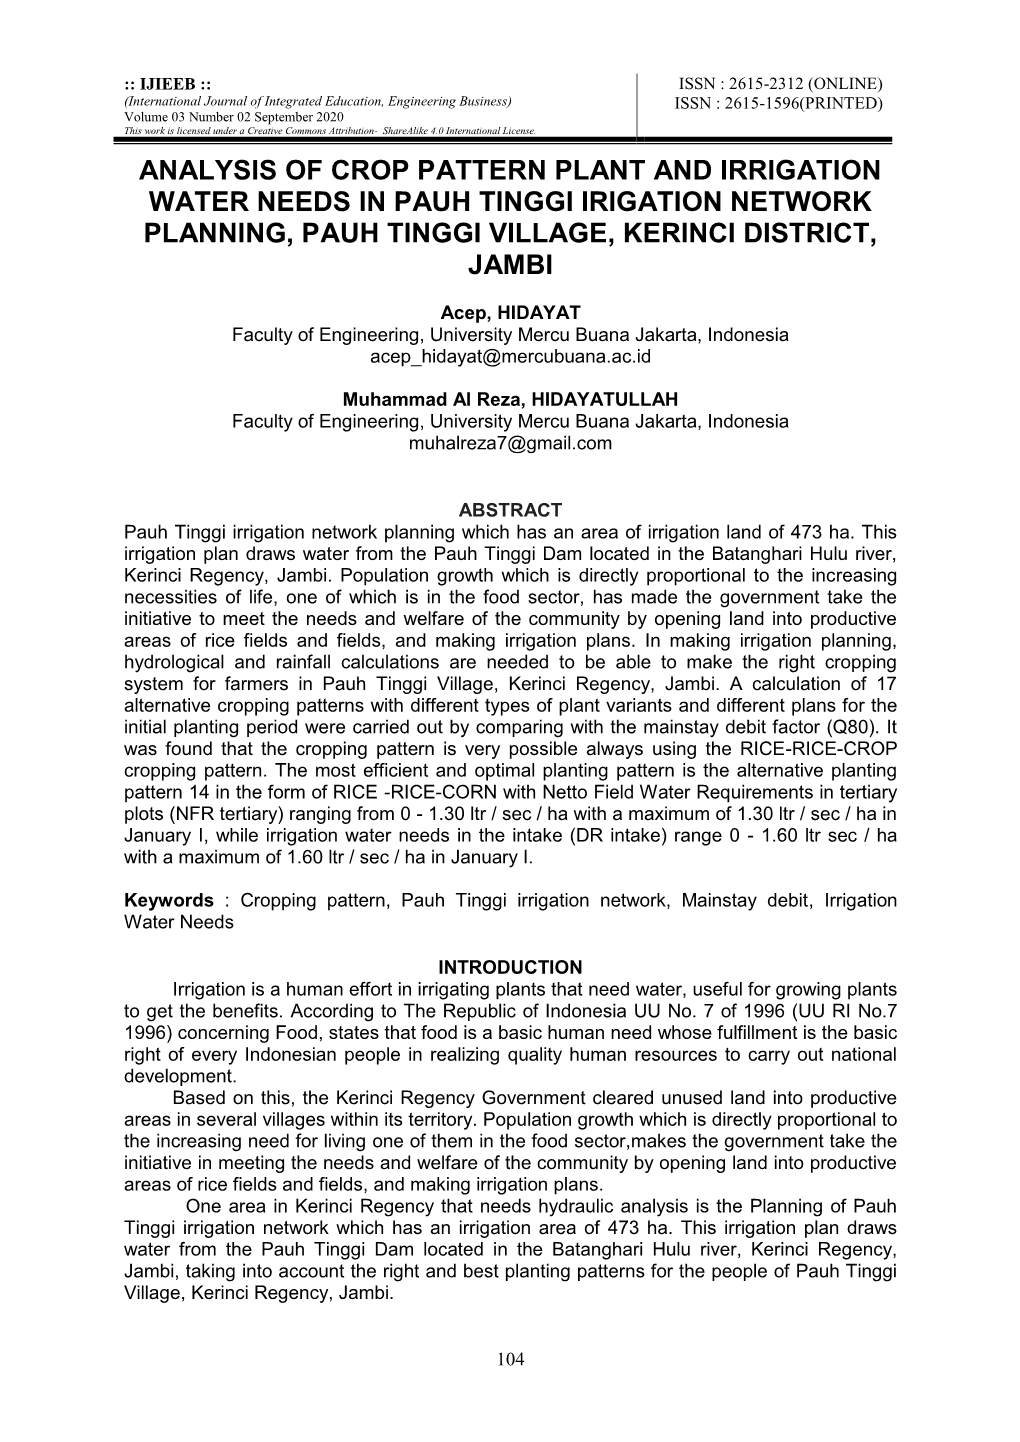 Analysis of Crop Pattern Plant and Irrigation Water Needs in Pauh Tinggi Irigation Network Planning, Pauh Tinggi Village, Kerinci District, Jambi